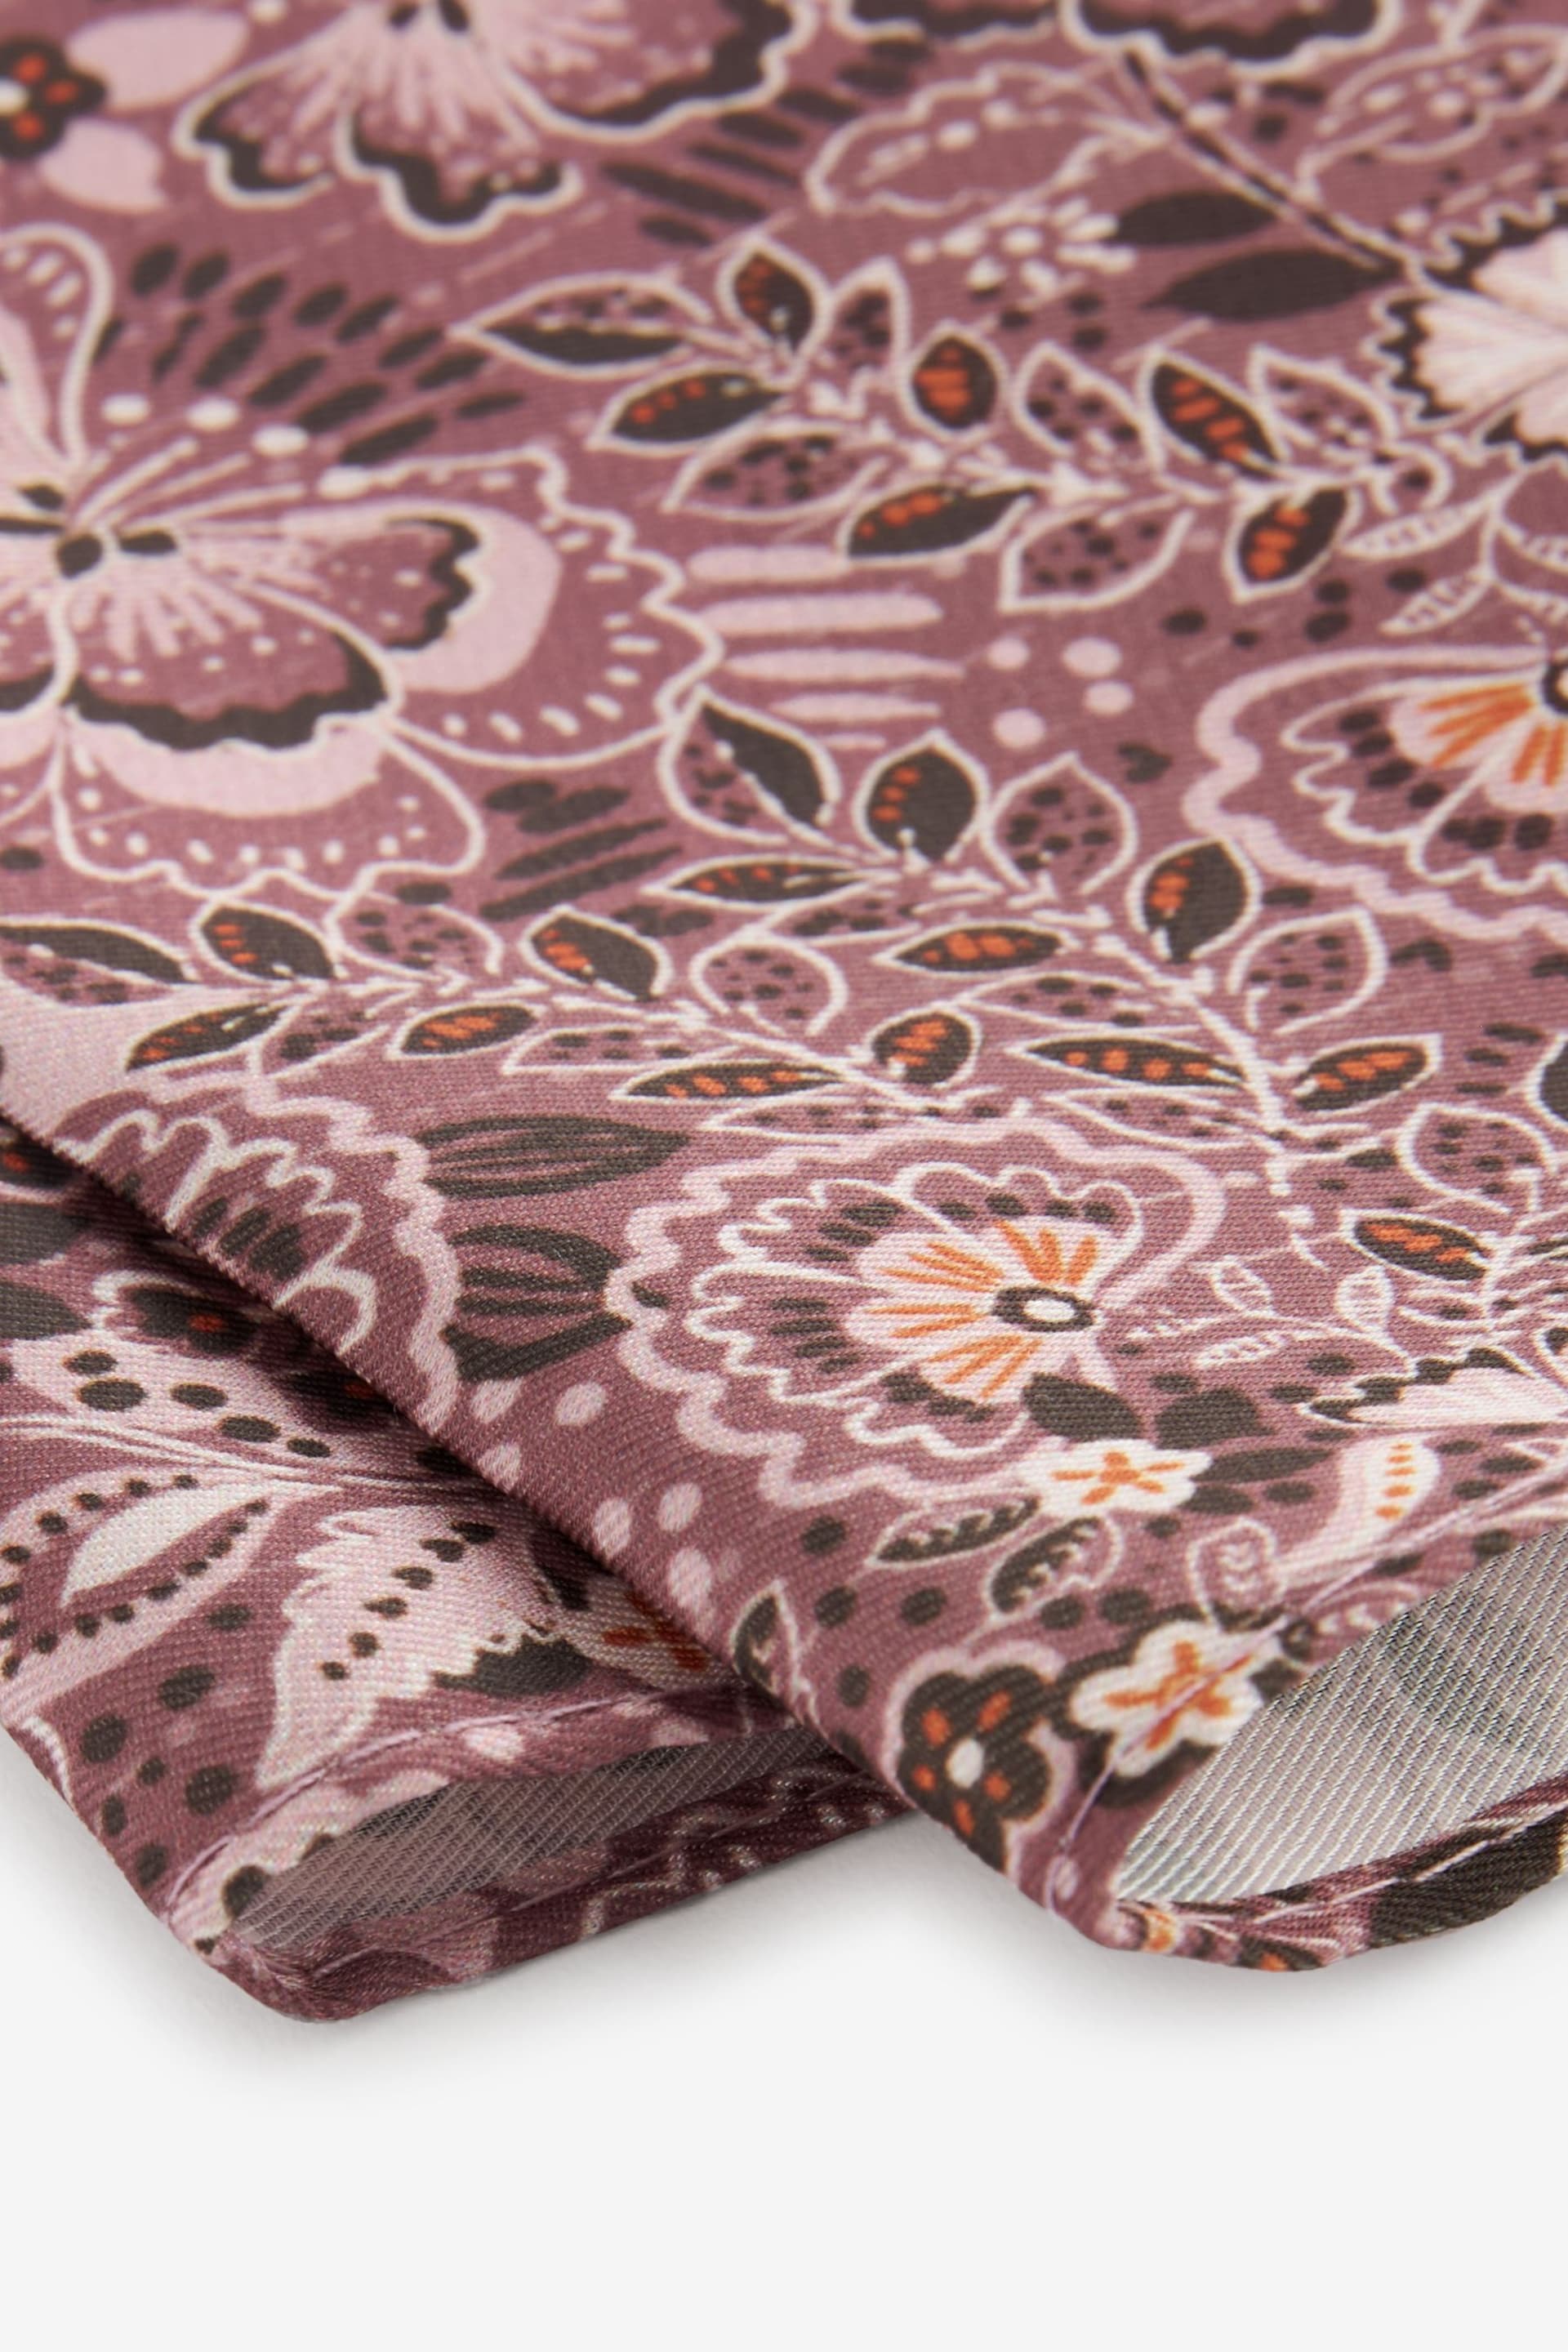 Pink Floral Tie And Pocket Square Set - Image 2 of 5